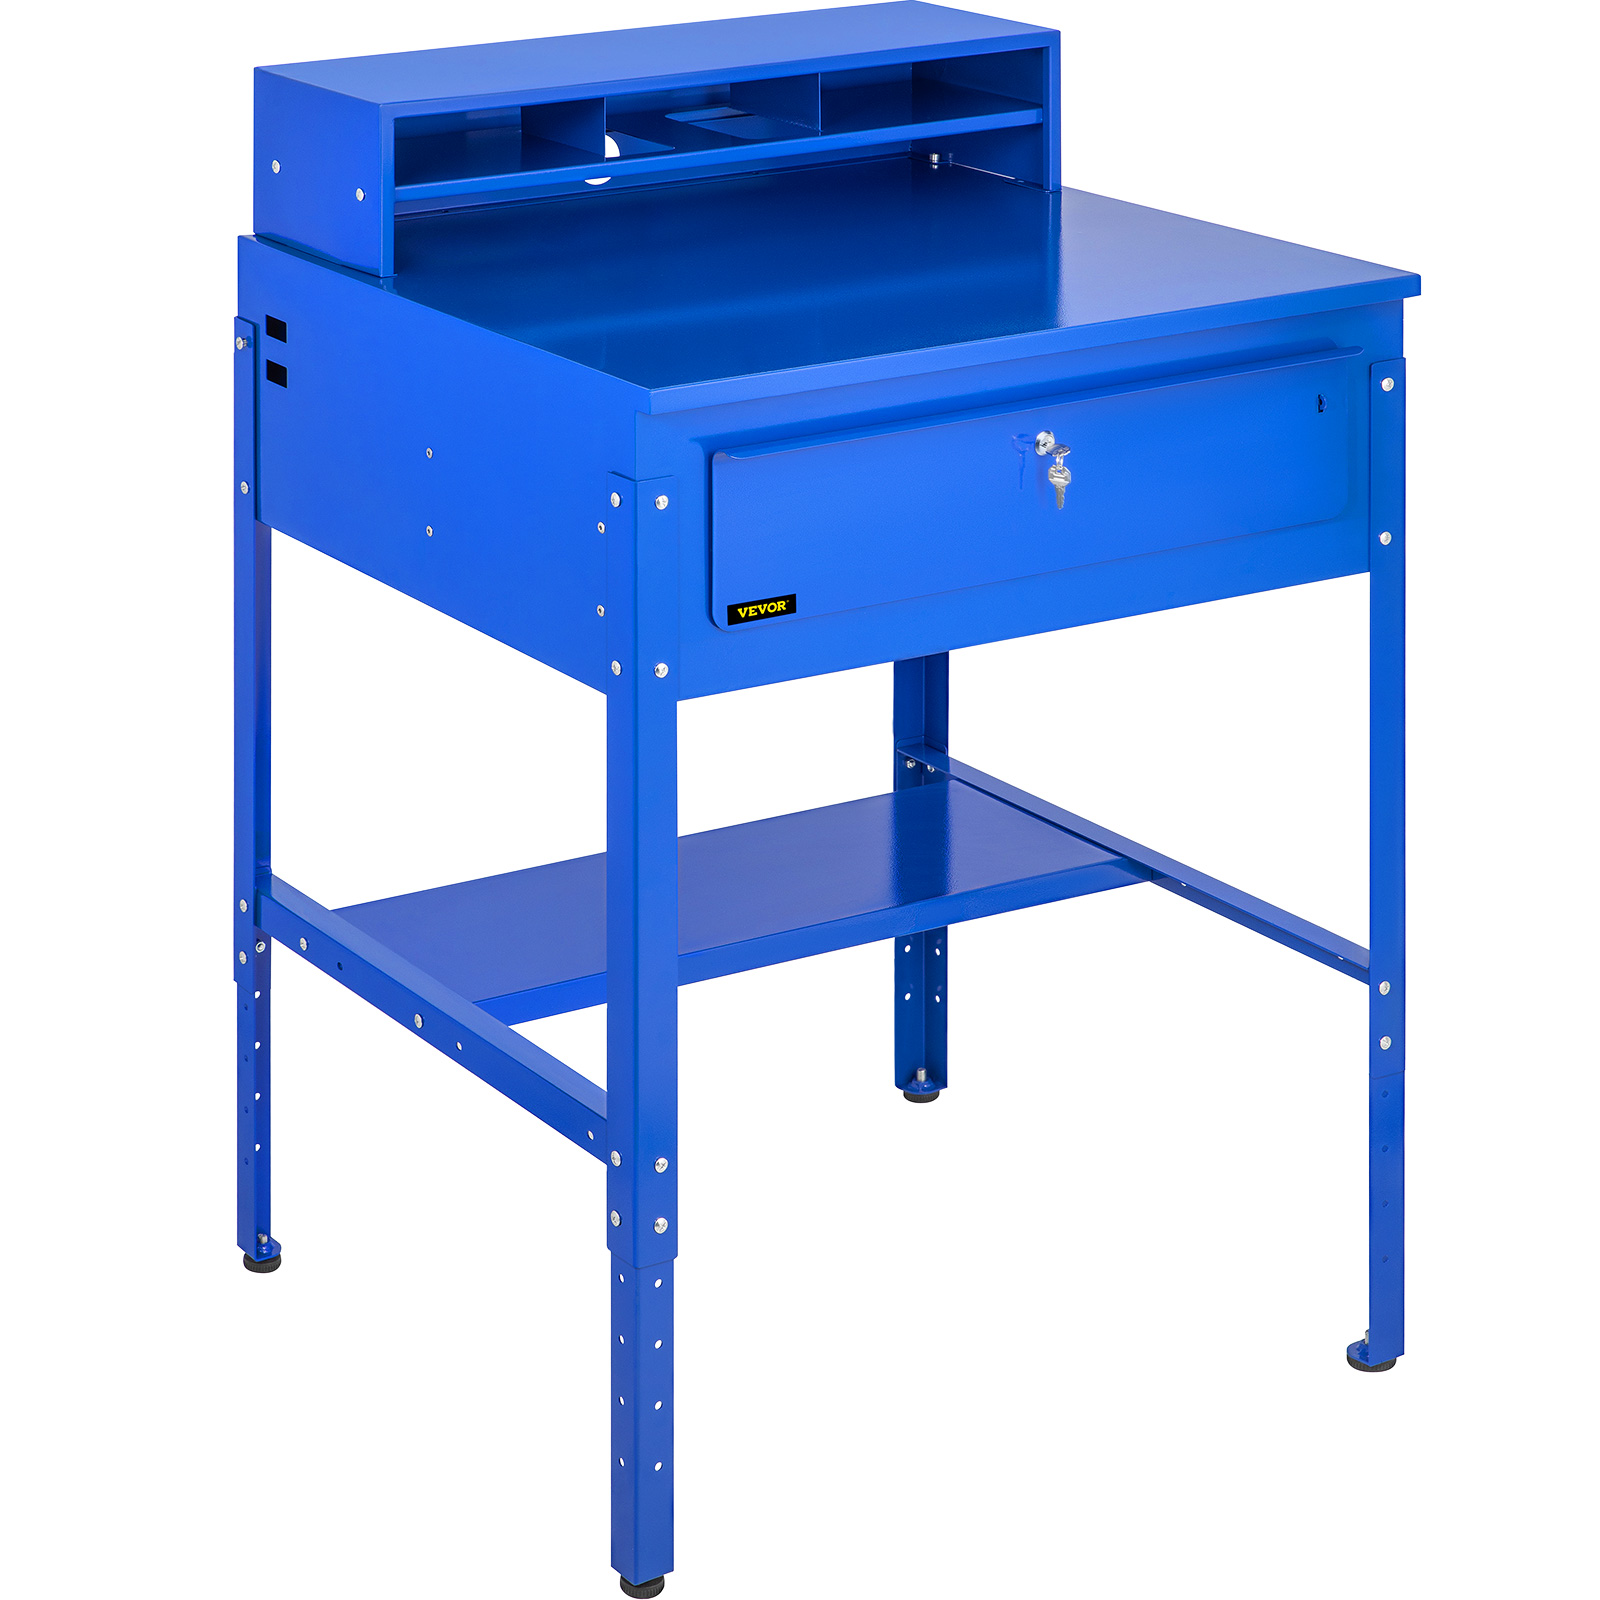 Vevor Flat Top Shop Desk W Built-in Storage 31.5"w X 26.8"d X 45.7"h Blue от Vevor Many GEOs